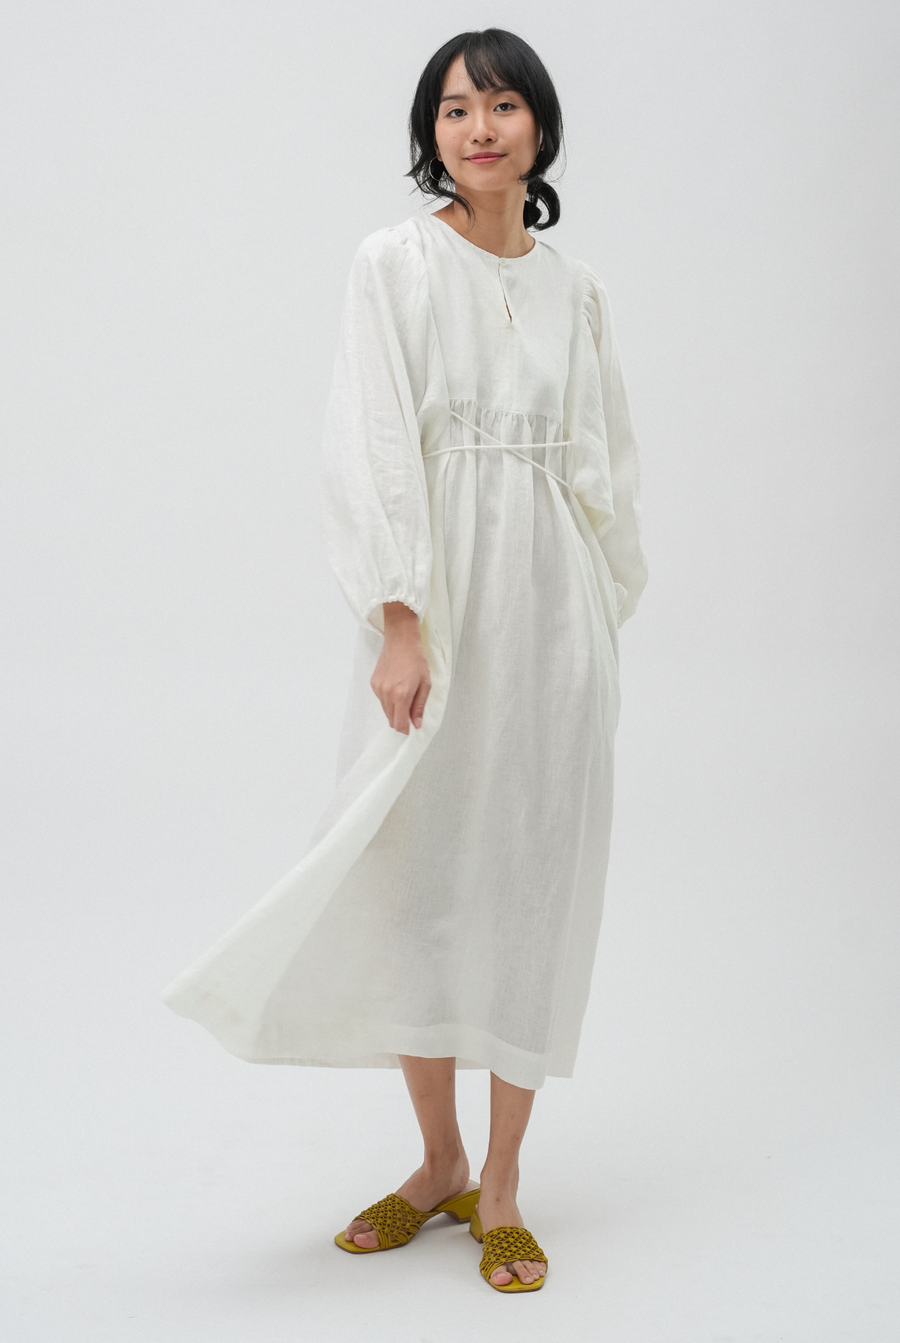 Daydream Linen Dress in White